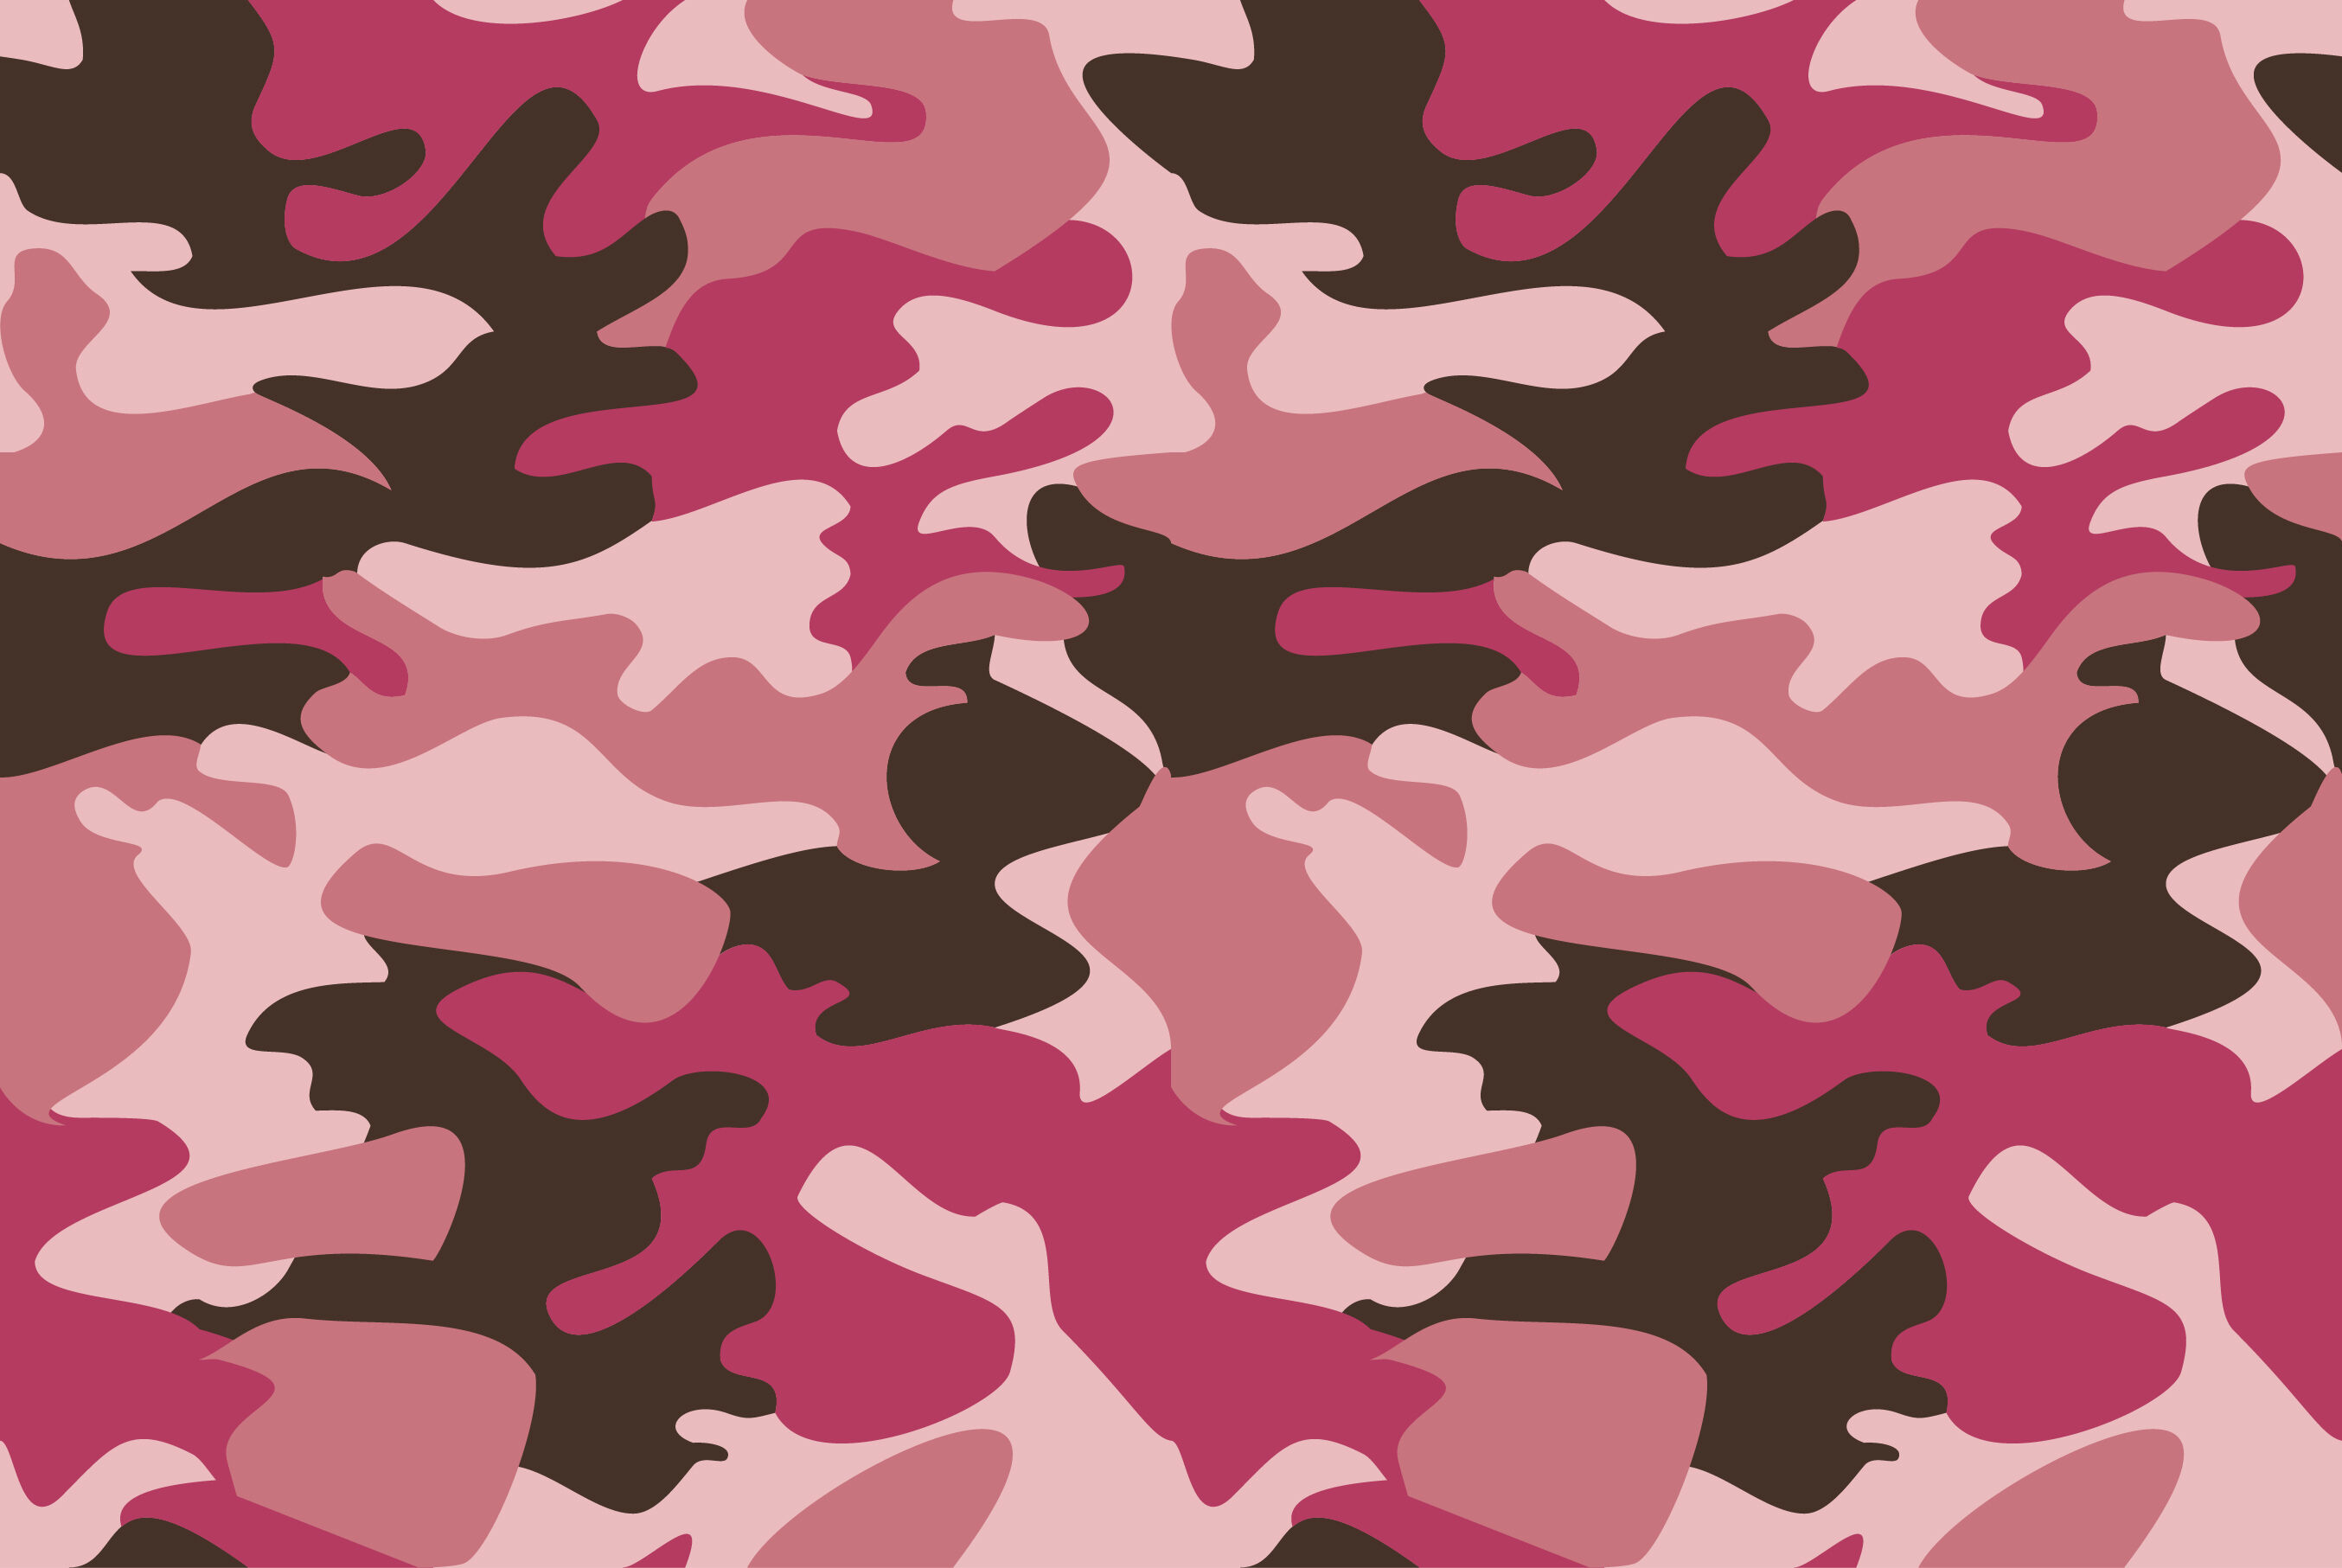 Pink Camo Background